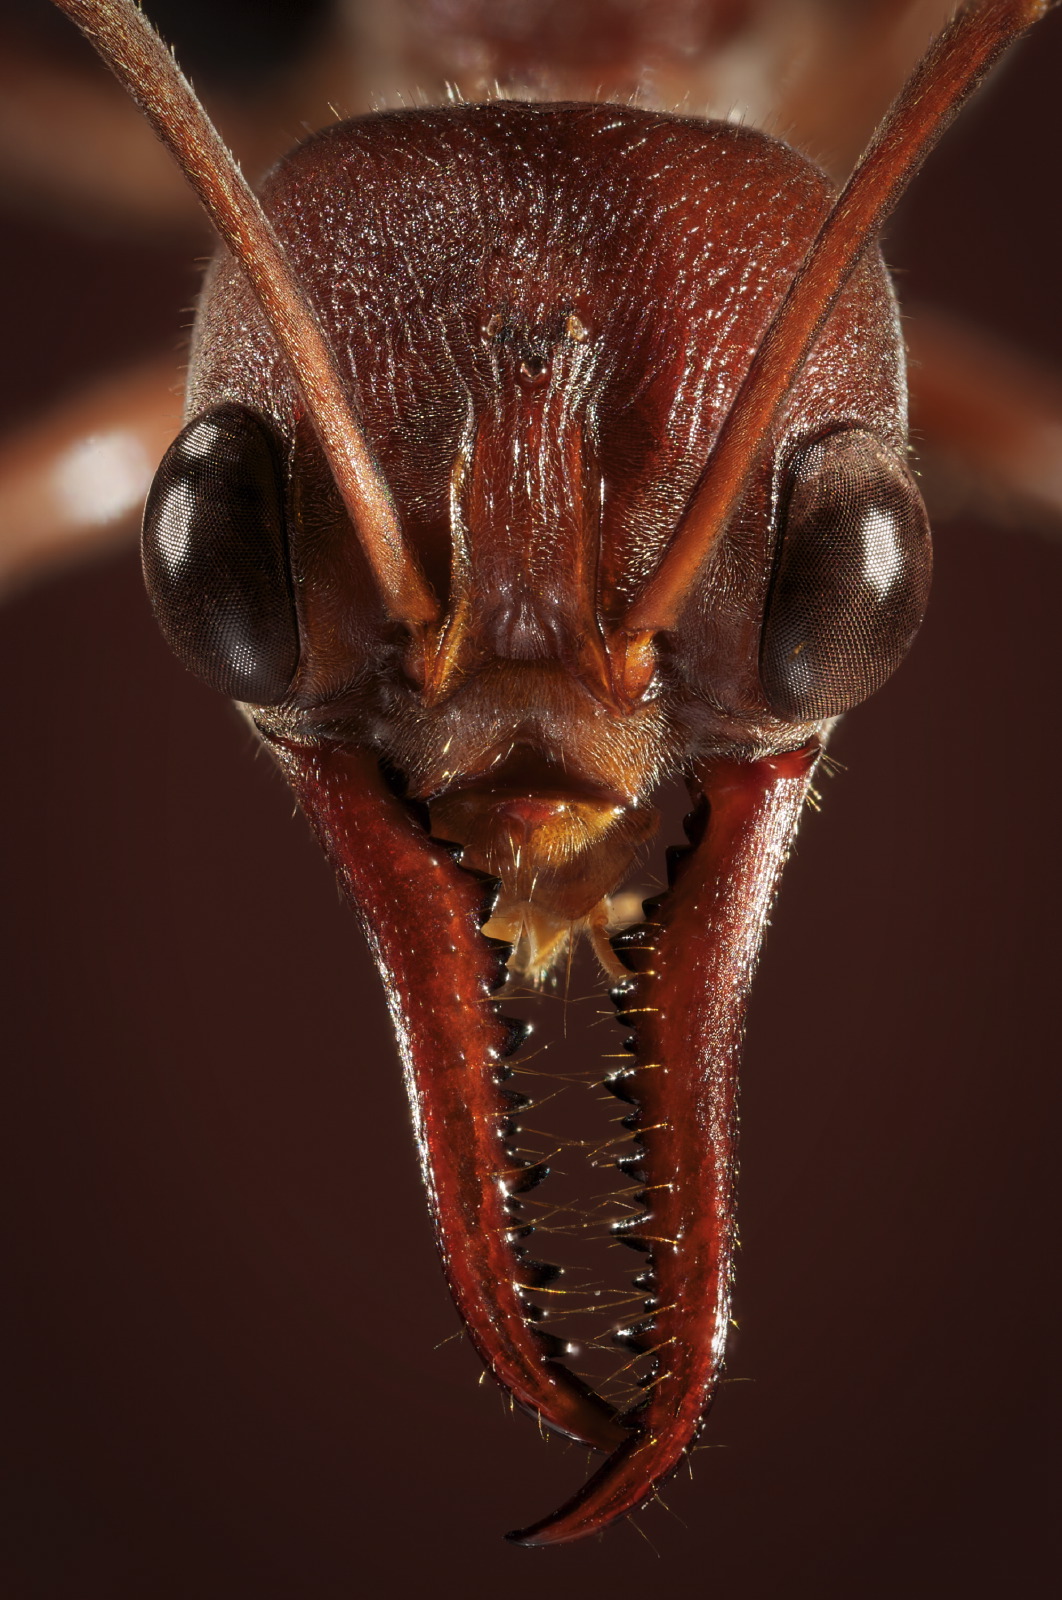 Myrmecia ant portrait close-up